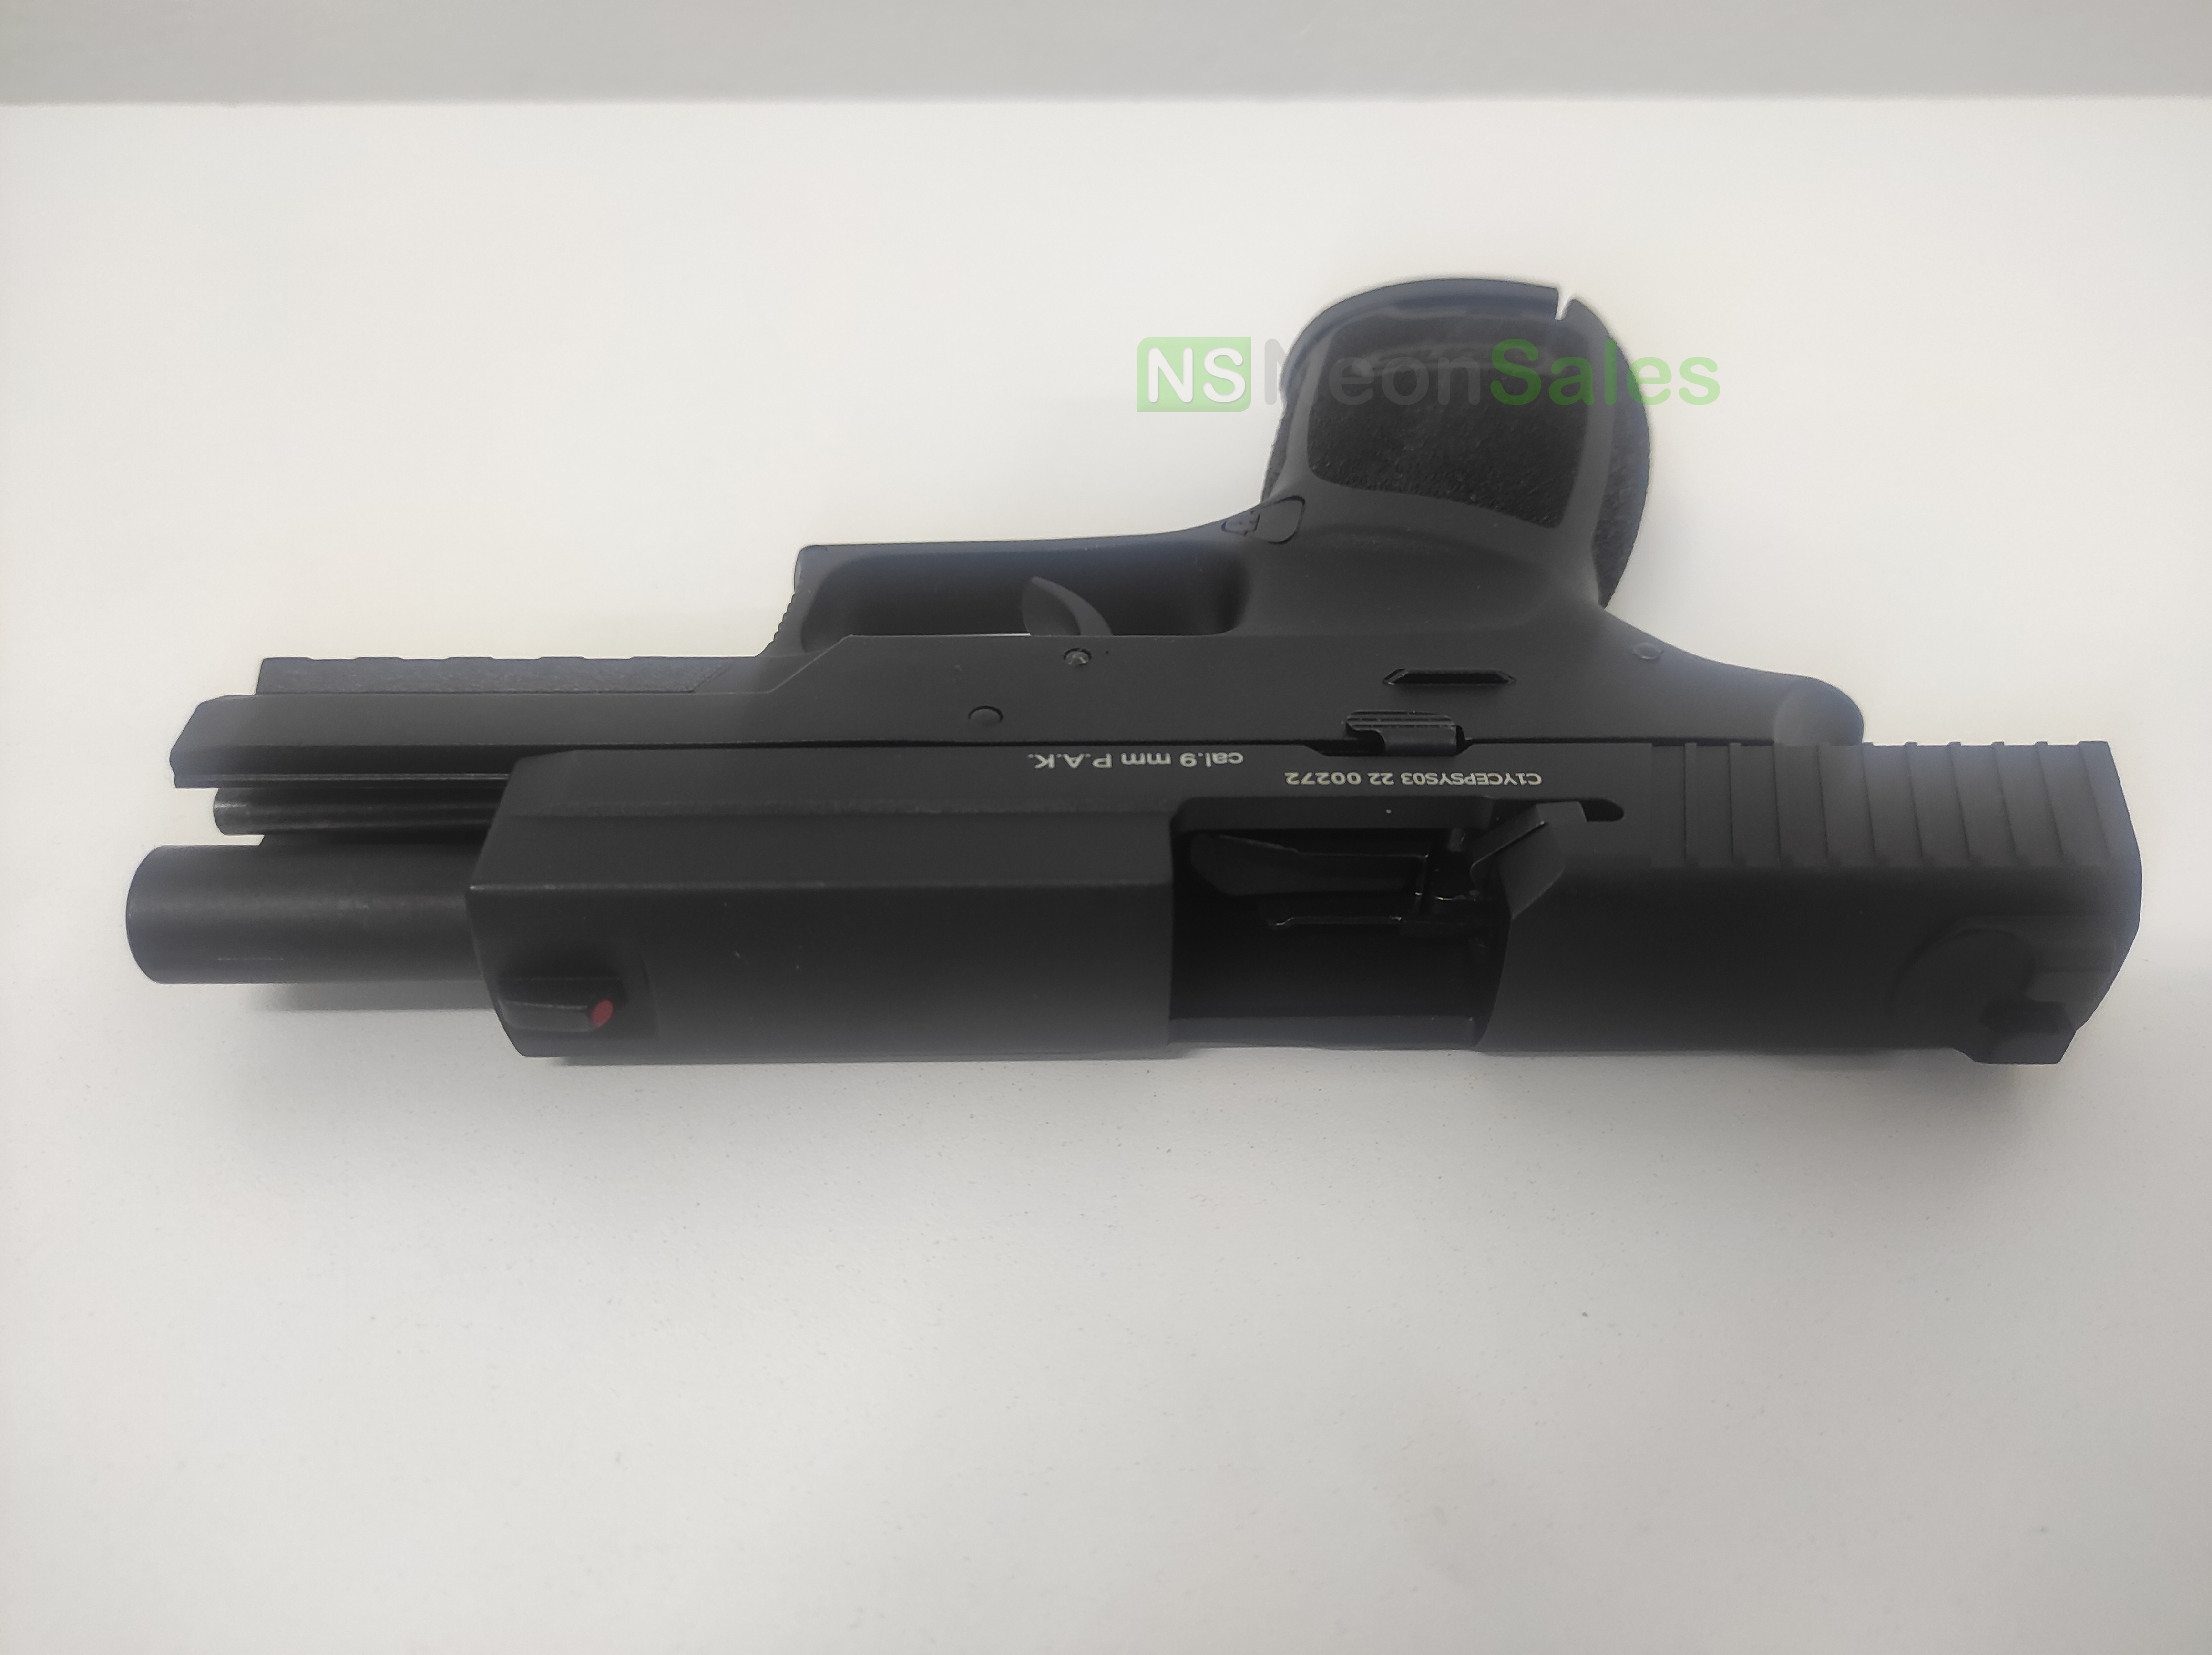 CEONIC P250 (P320 REPLICA) BLANK GUN - BLACK